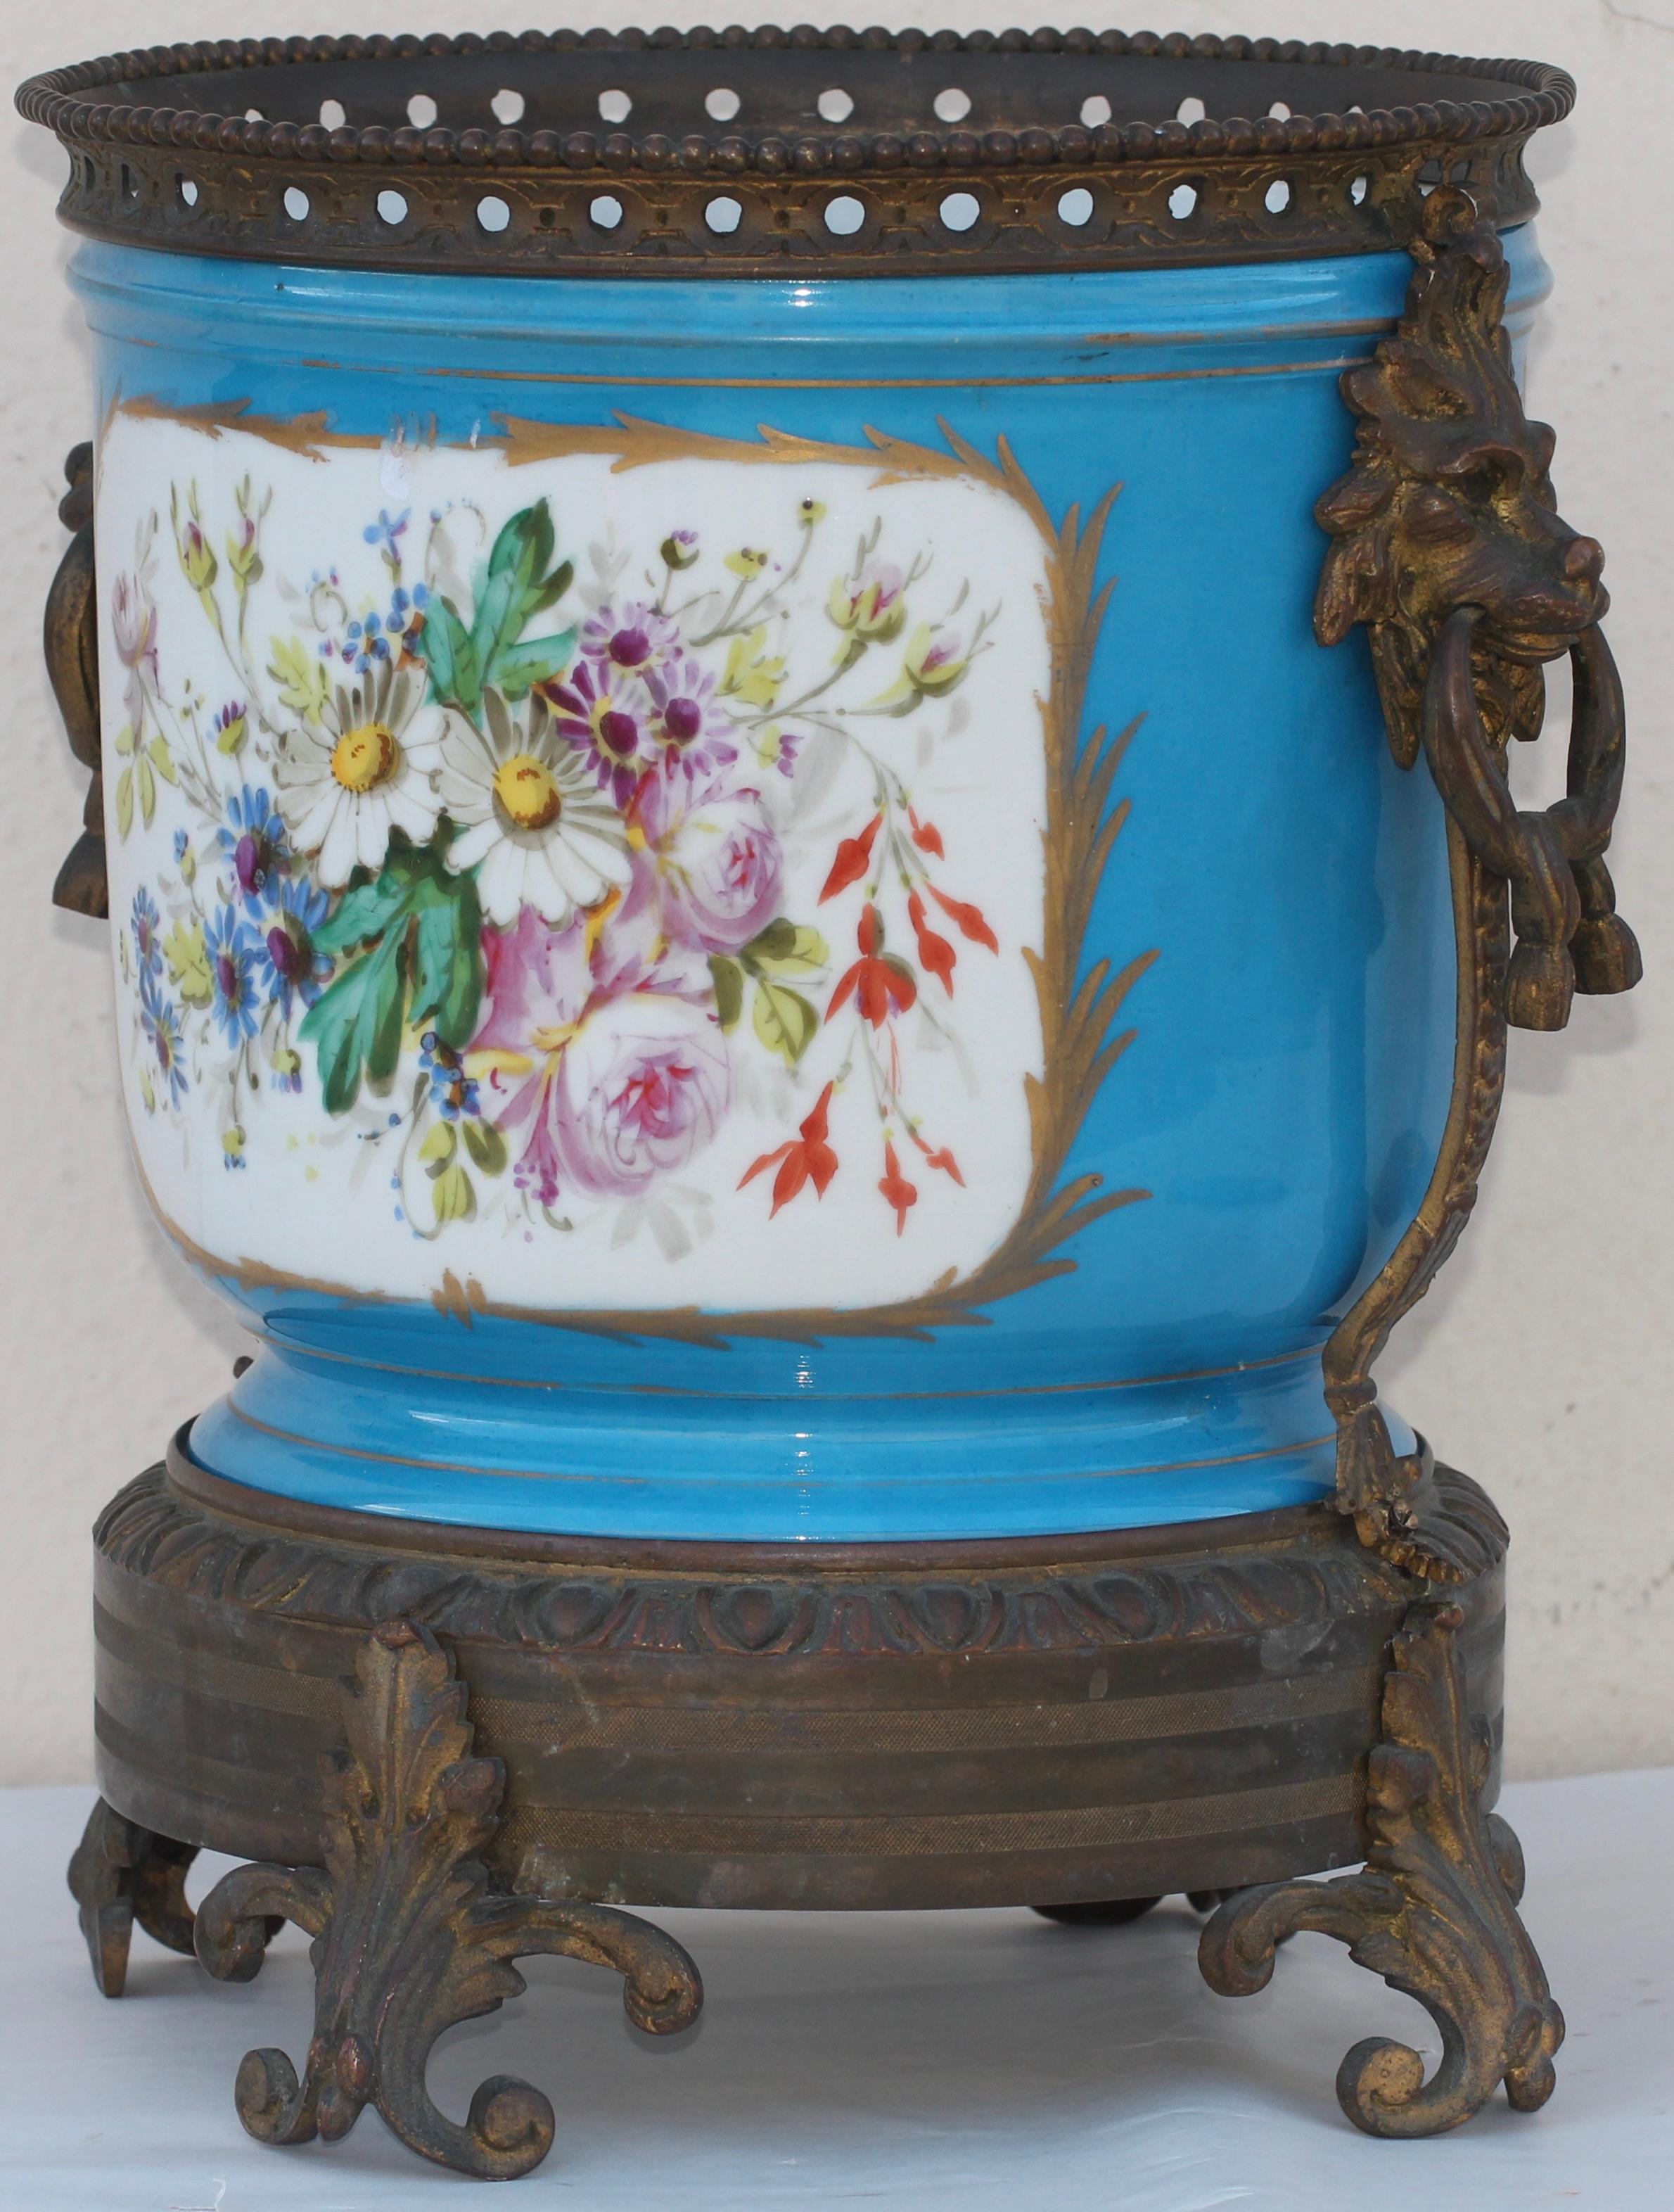 Late 19th Century 19th Century Louis XVI Style Ormolu-Mounted Sèvres Porcelain Cachepot